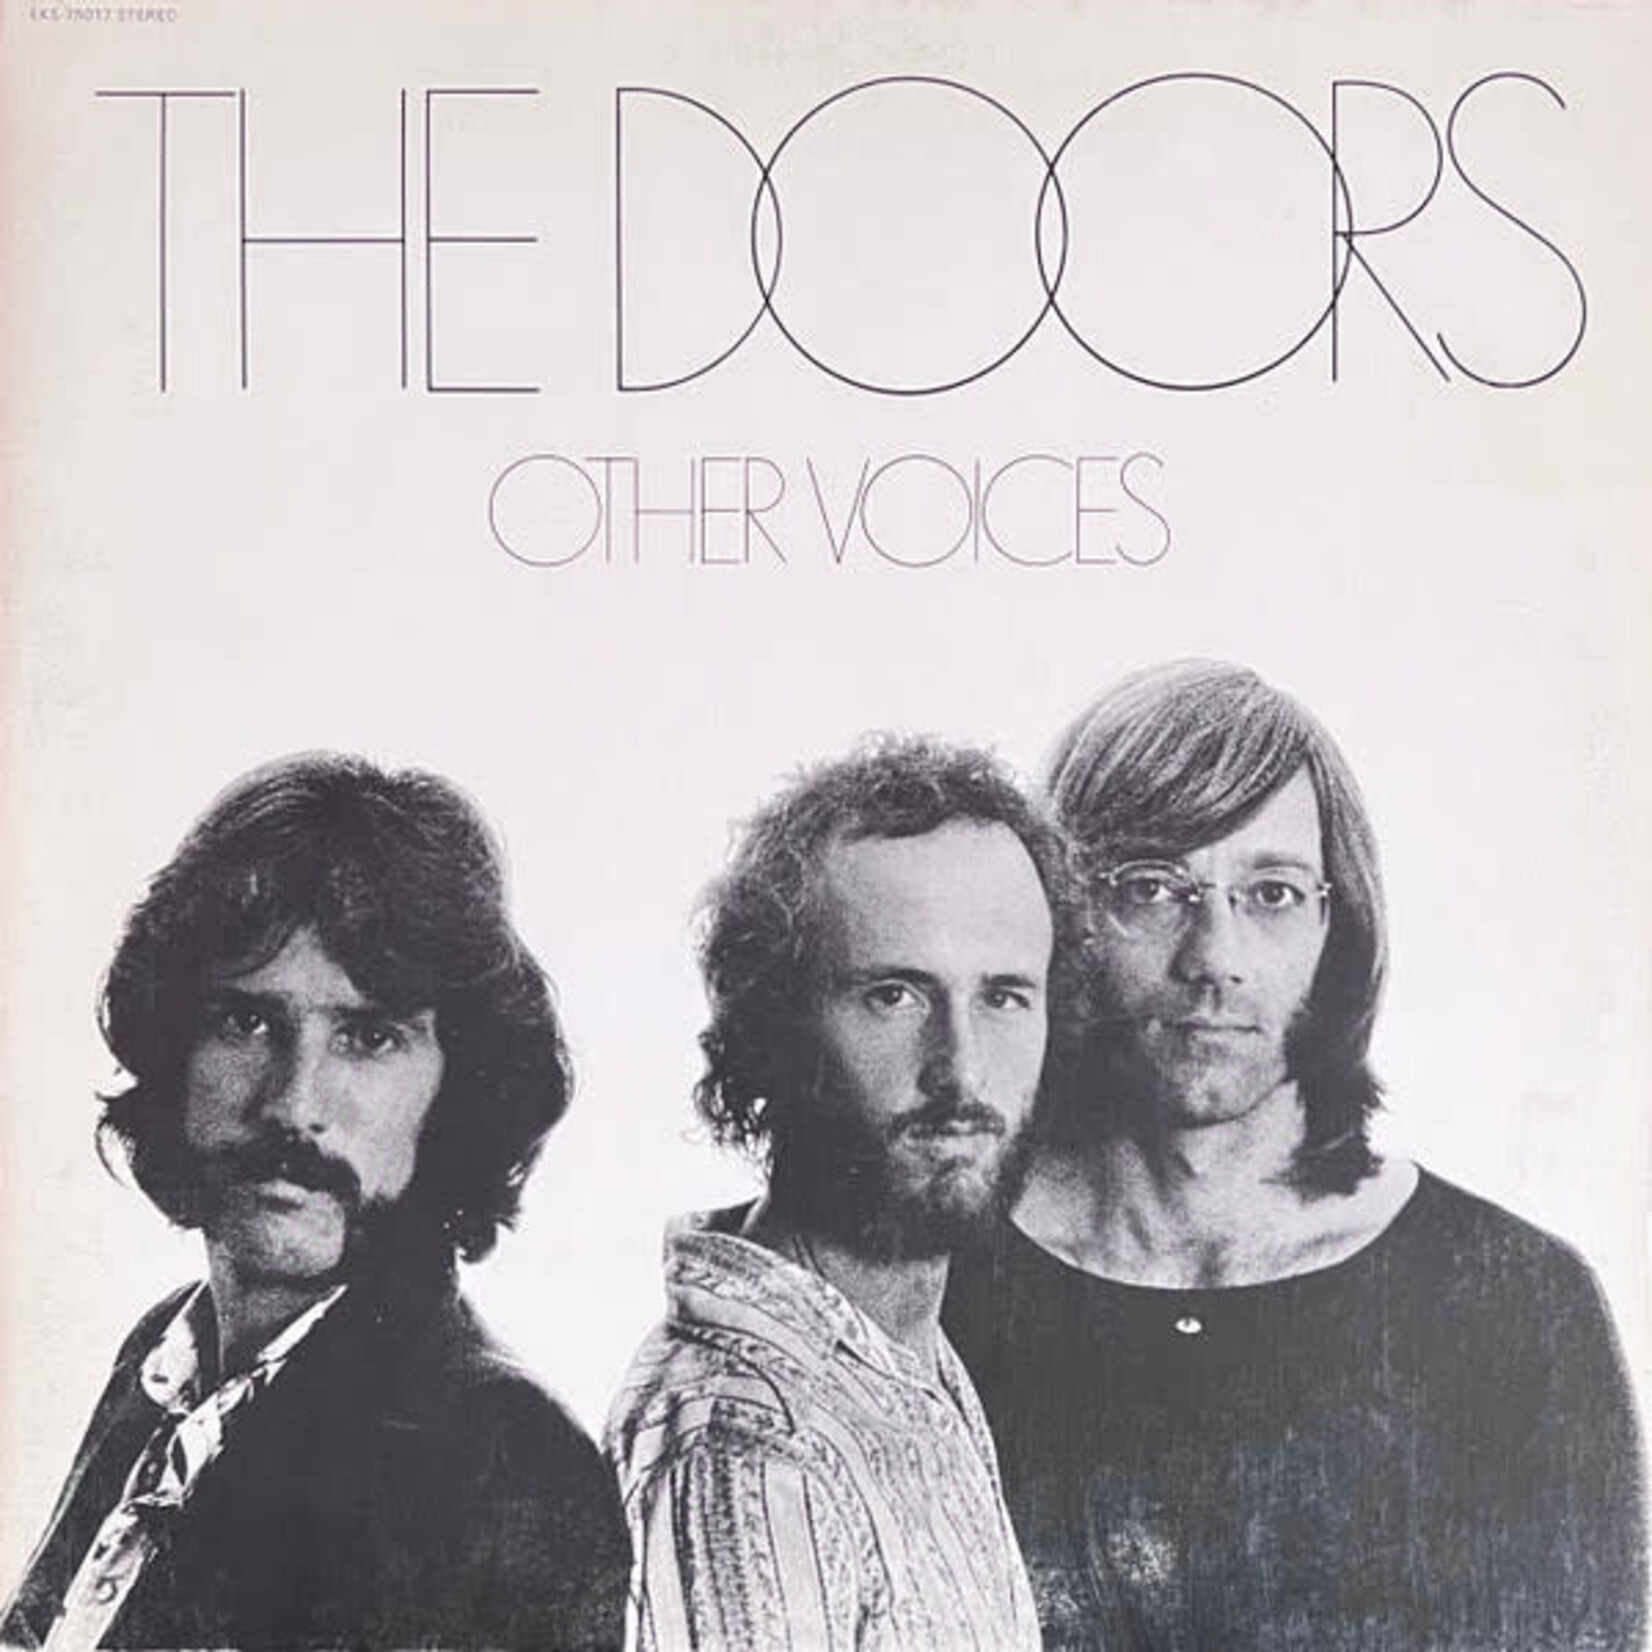 [Vintage] Doors - Other Voices